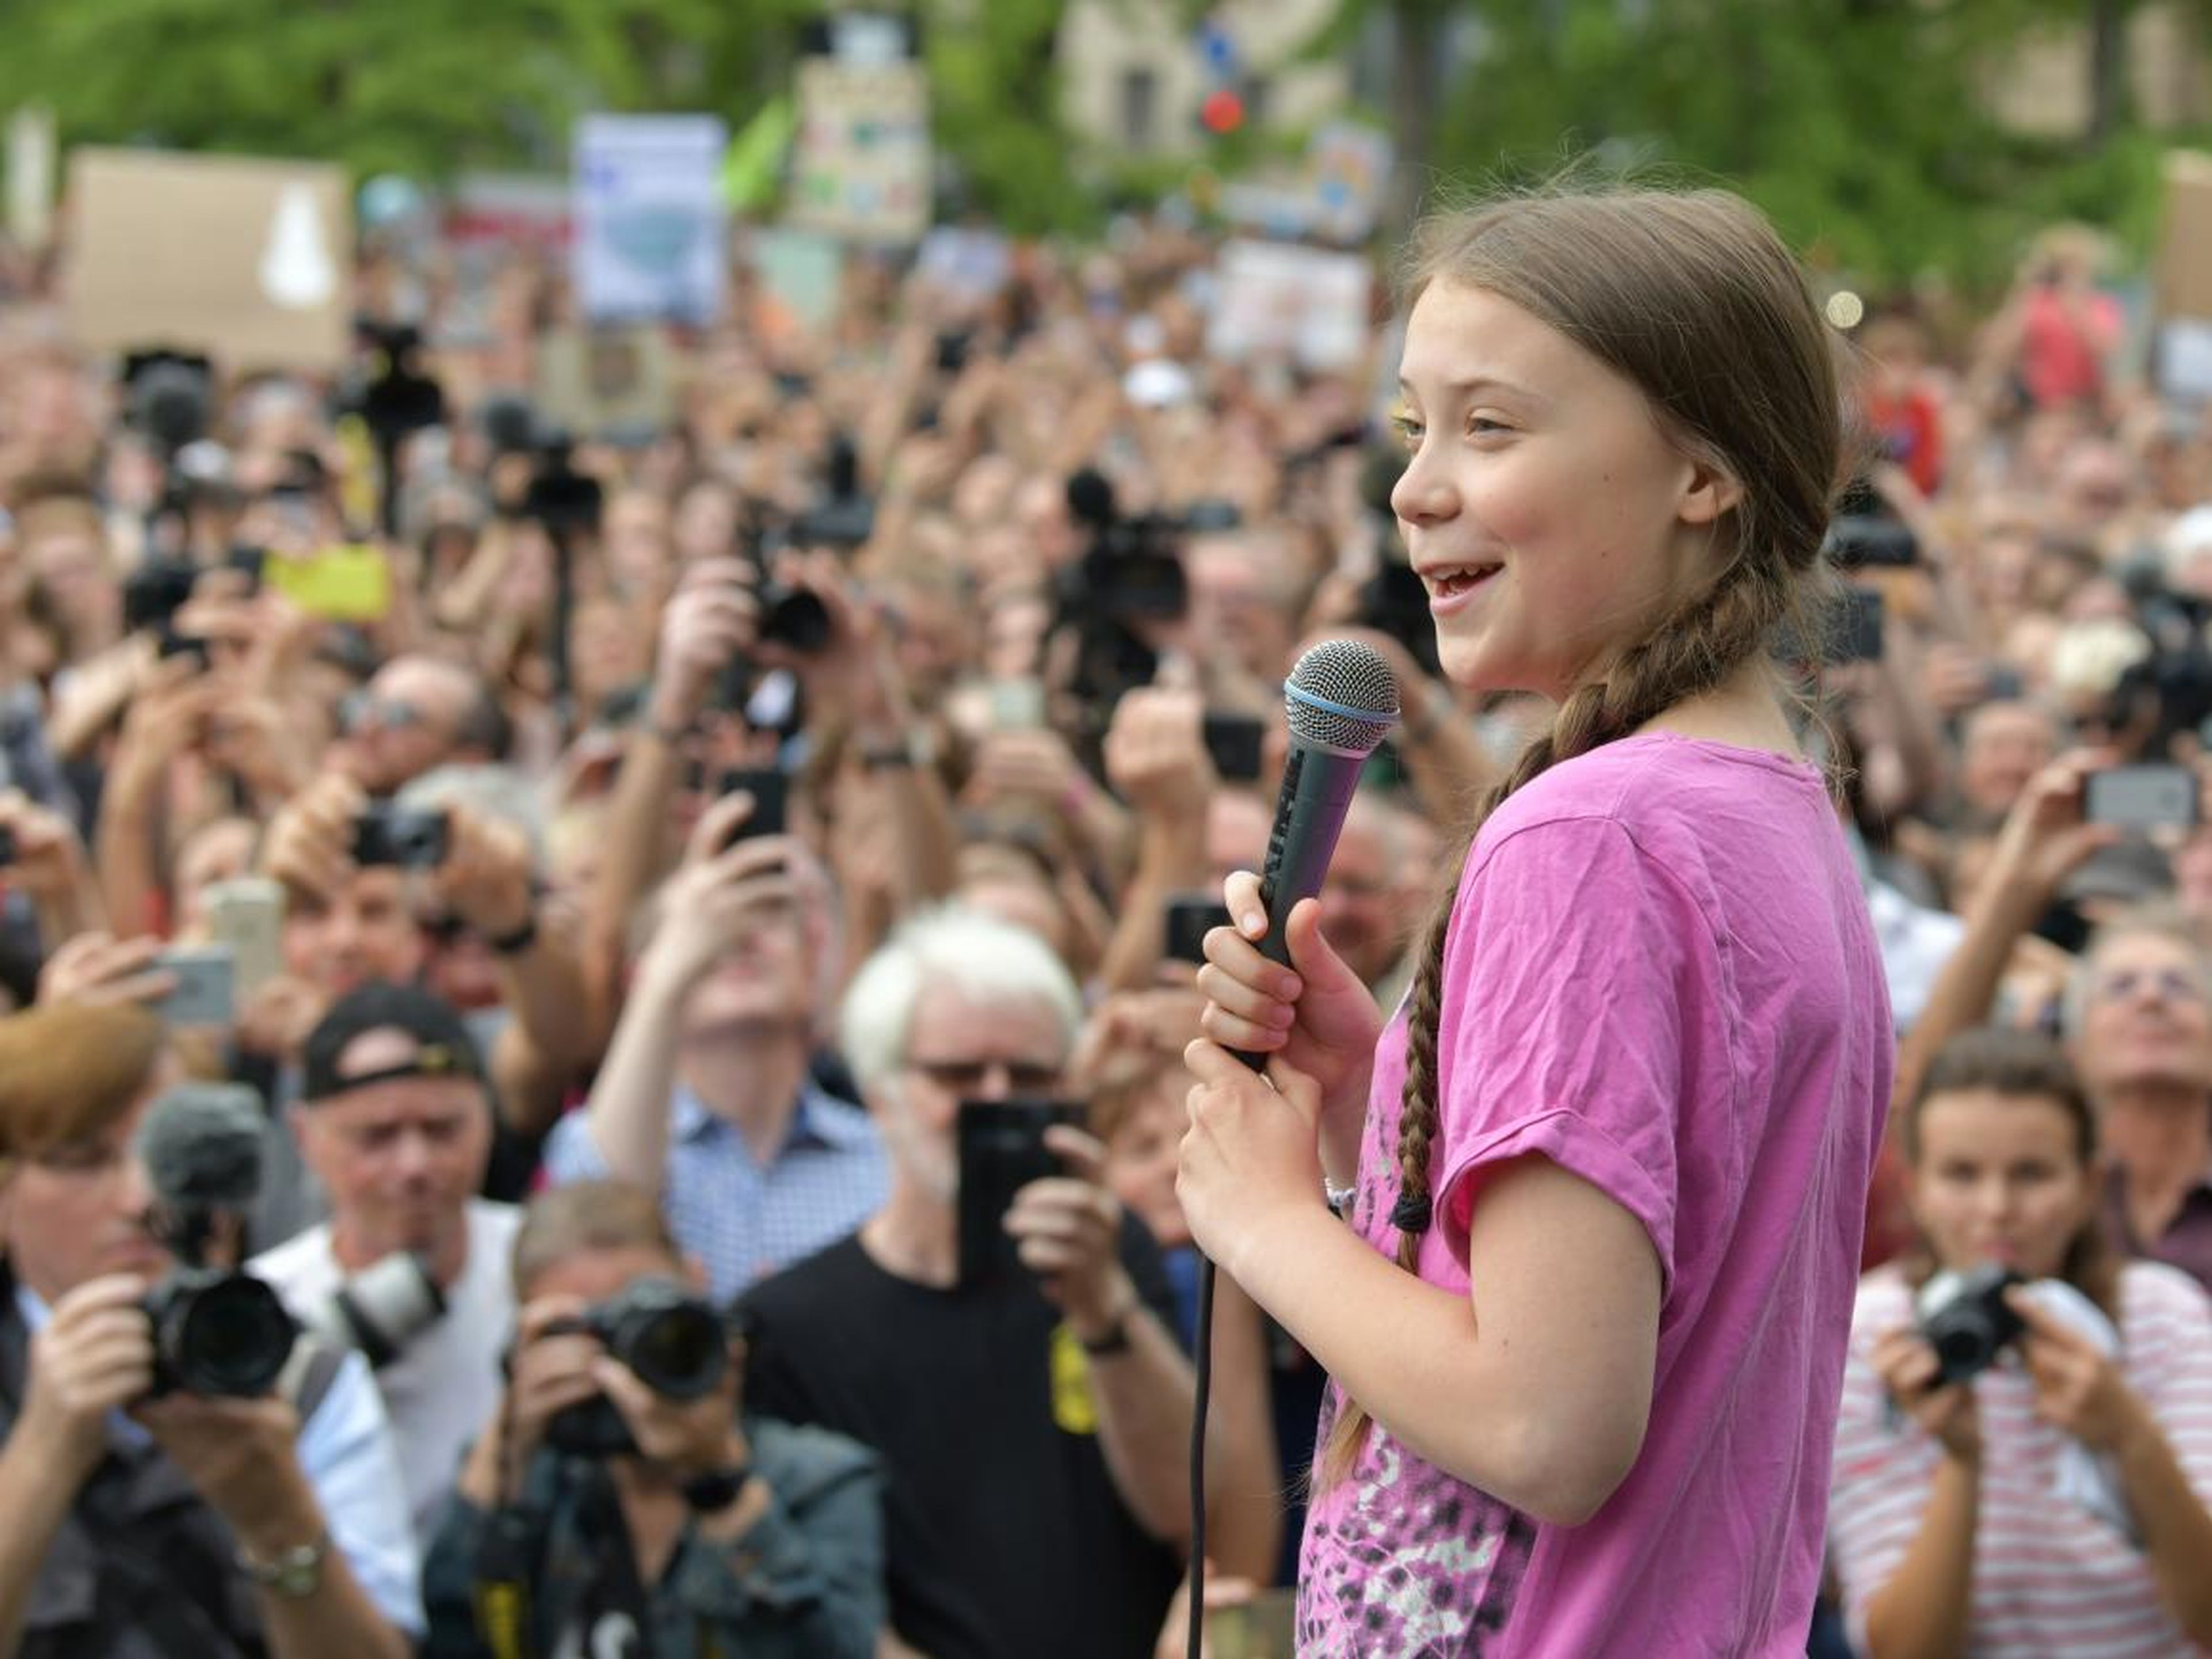 Greta Thunberg speaks at the school strike demonstration "Fridays for Future" in Berlin, Germany, July 19, 2019.